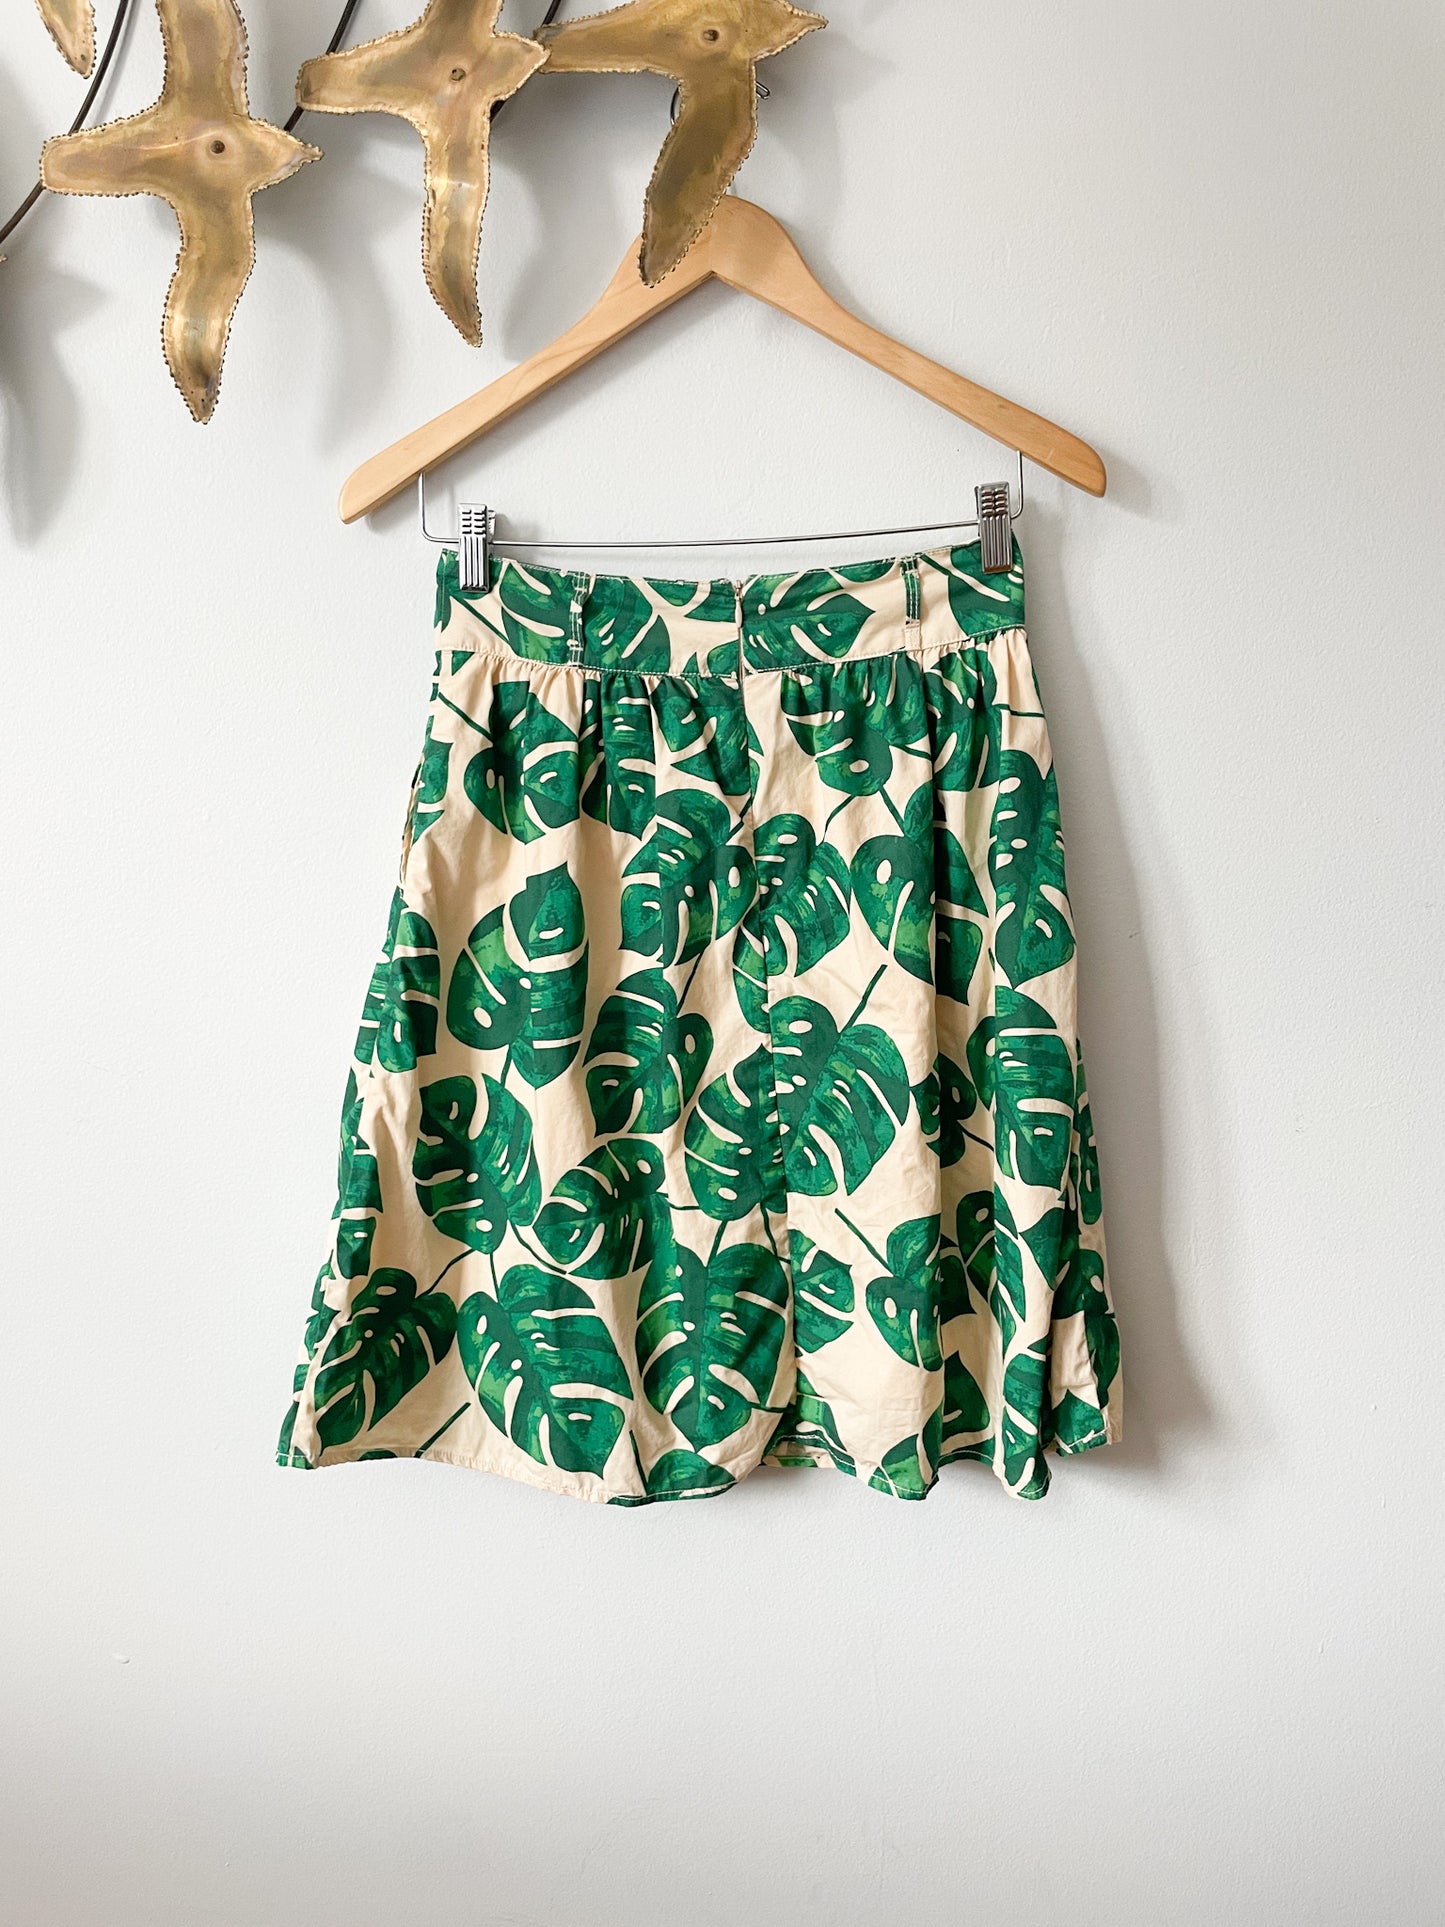 Vero Moda Green Monstera Plant Print Cotton Knee Length Skirt - Small